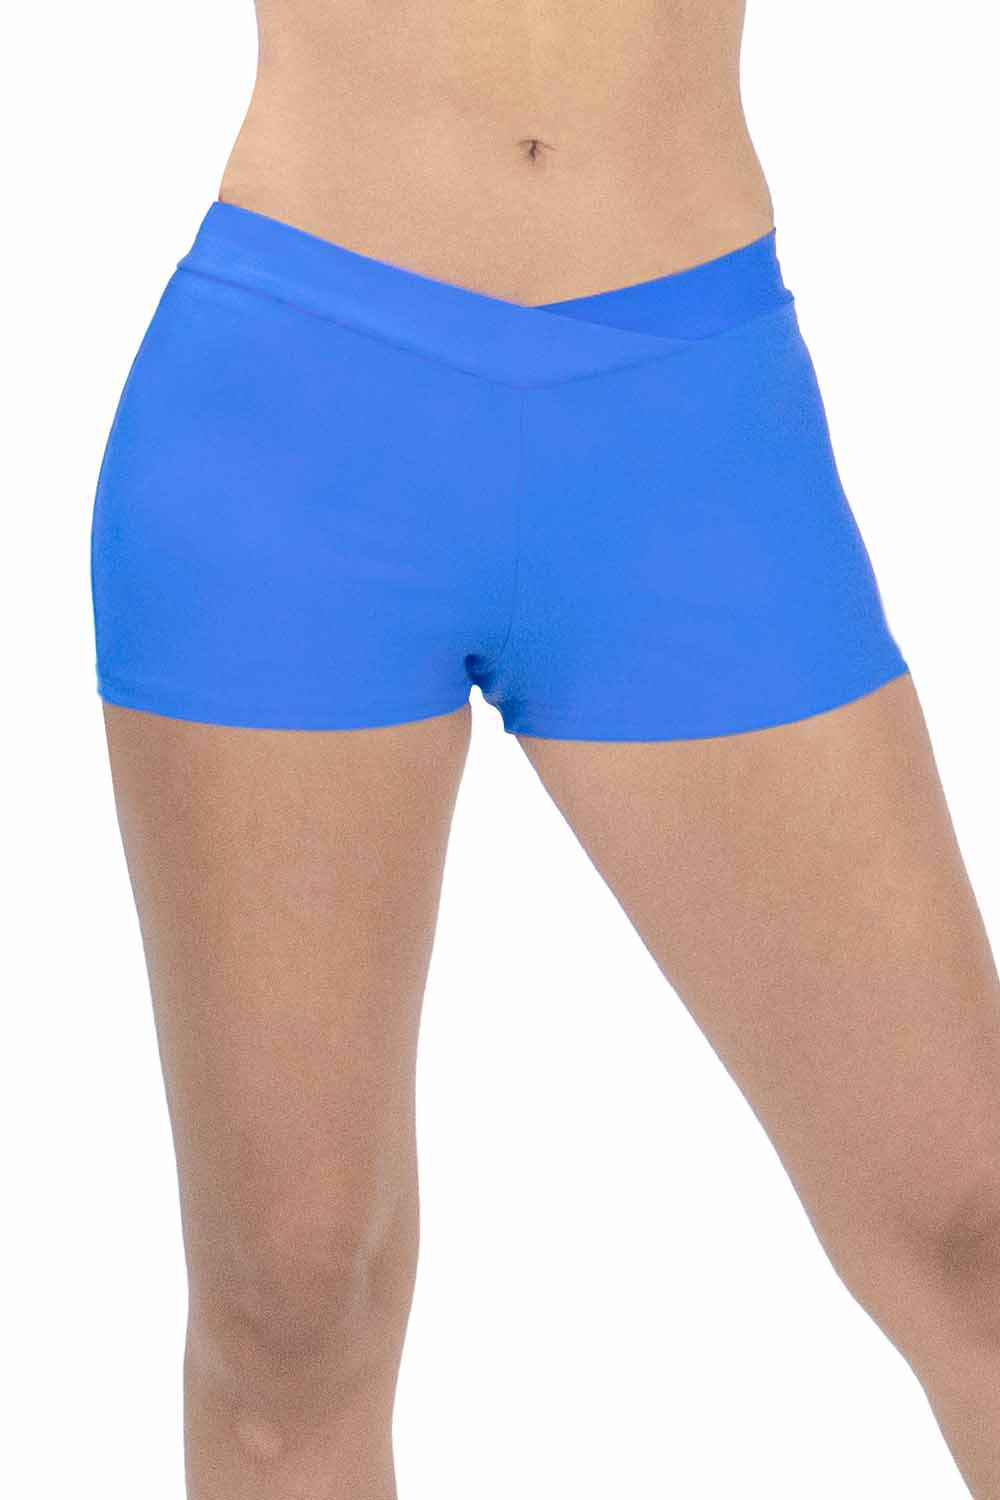 Adult 1" Inseam Microfiber V-front Hot Shorts